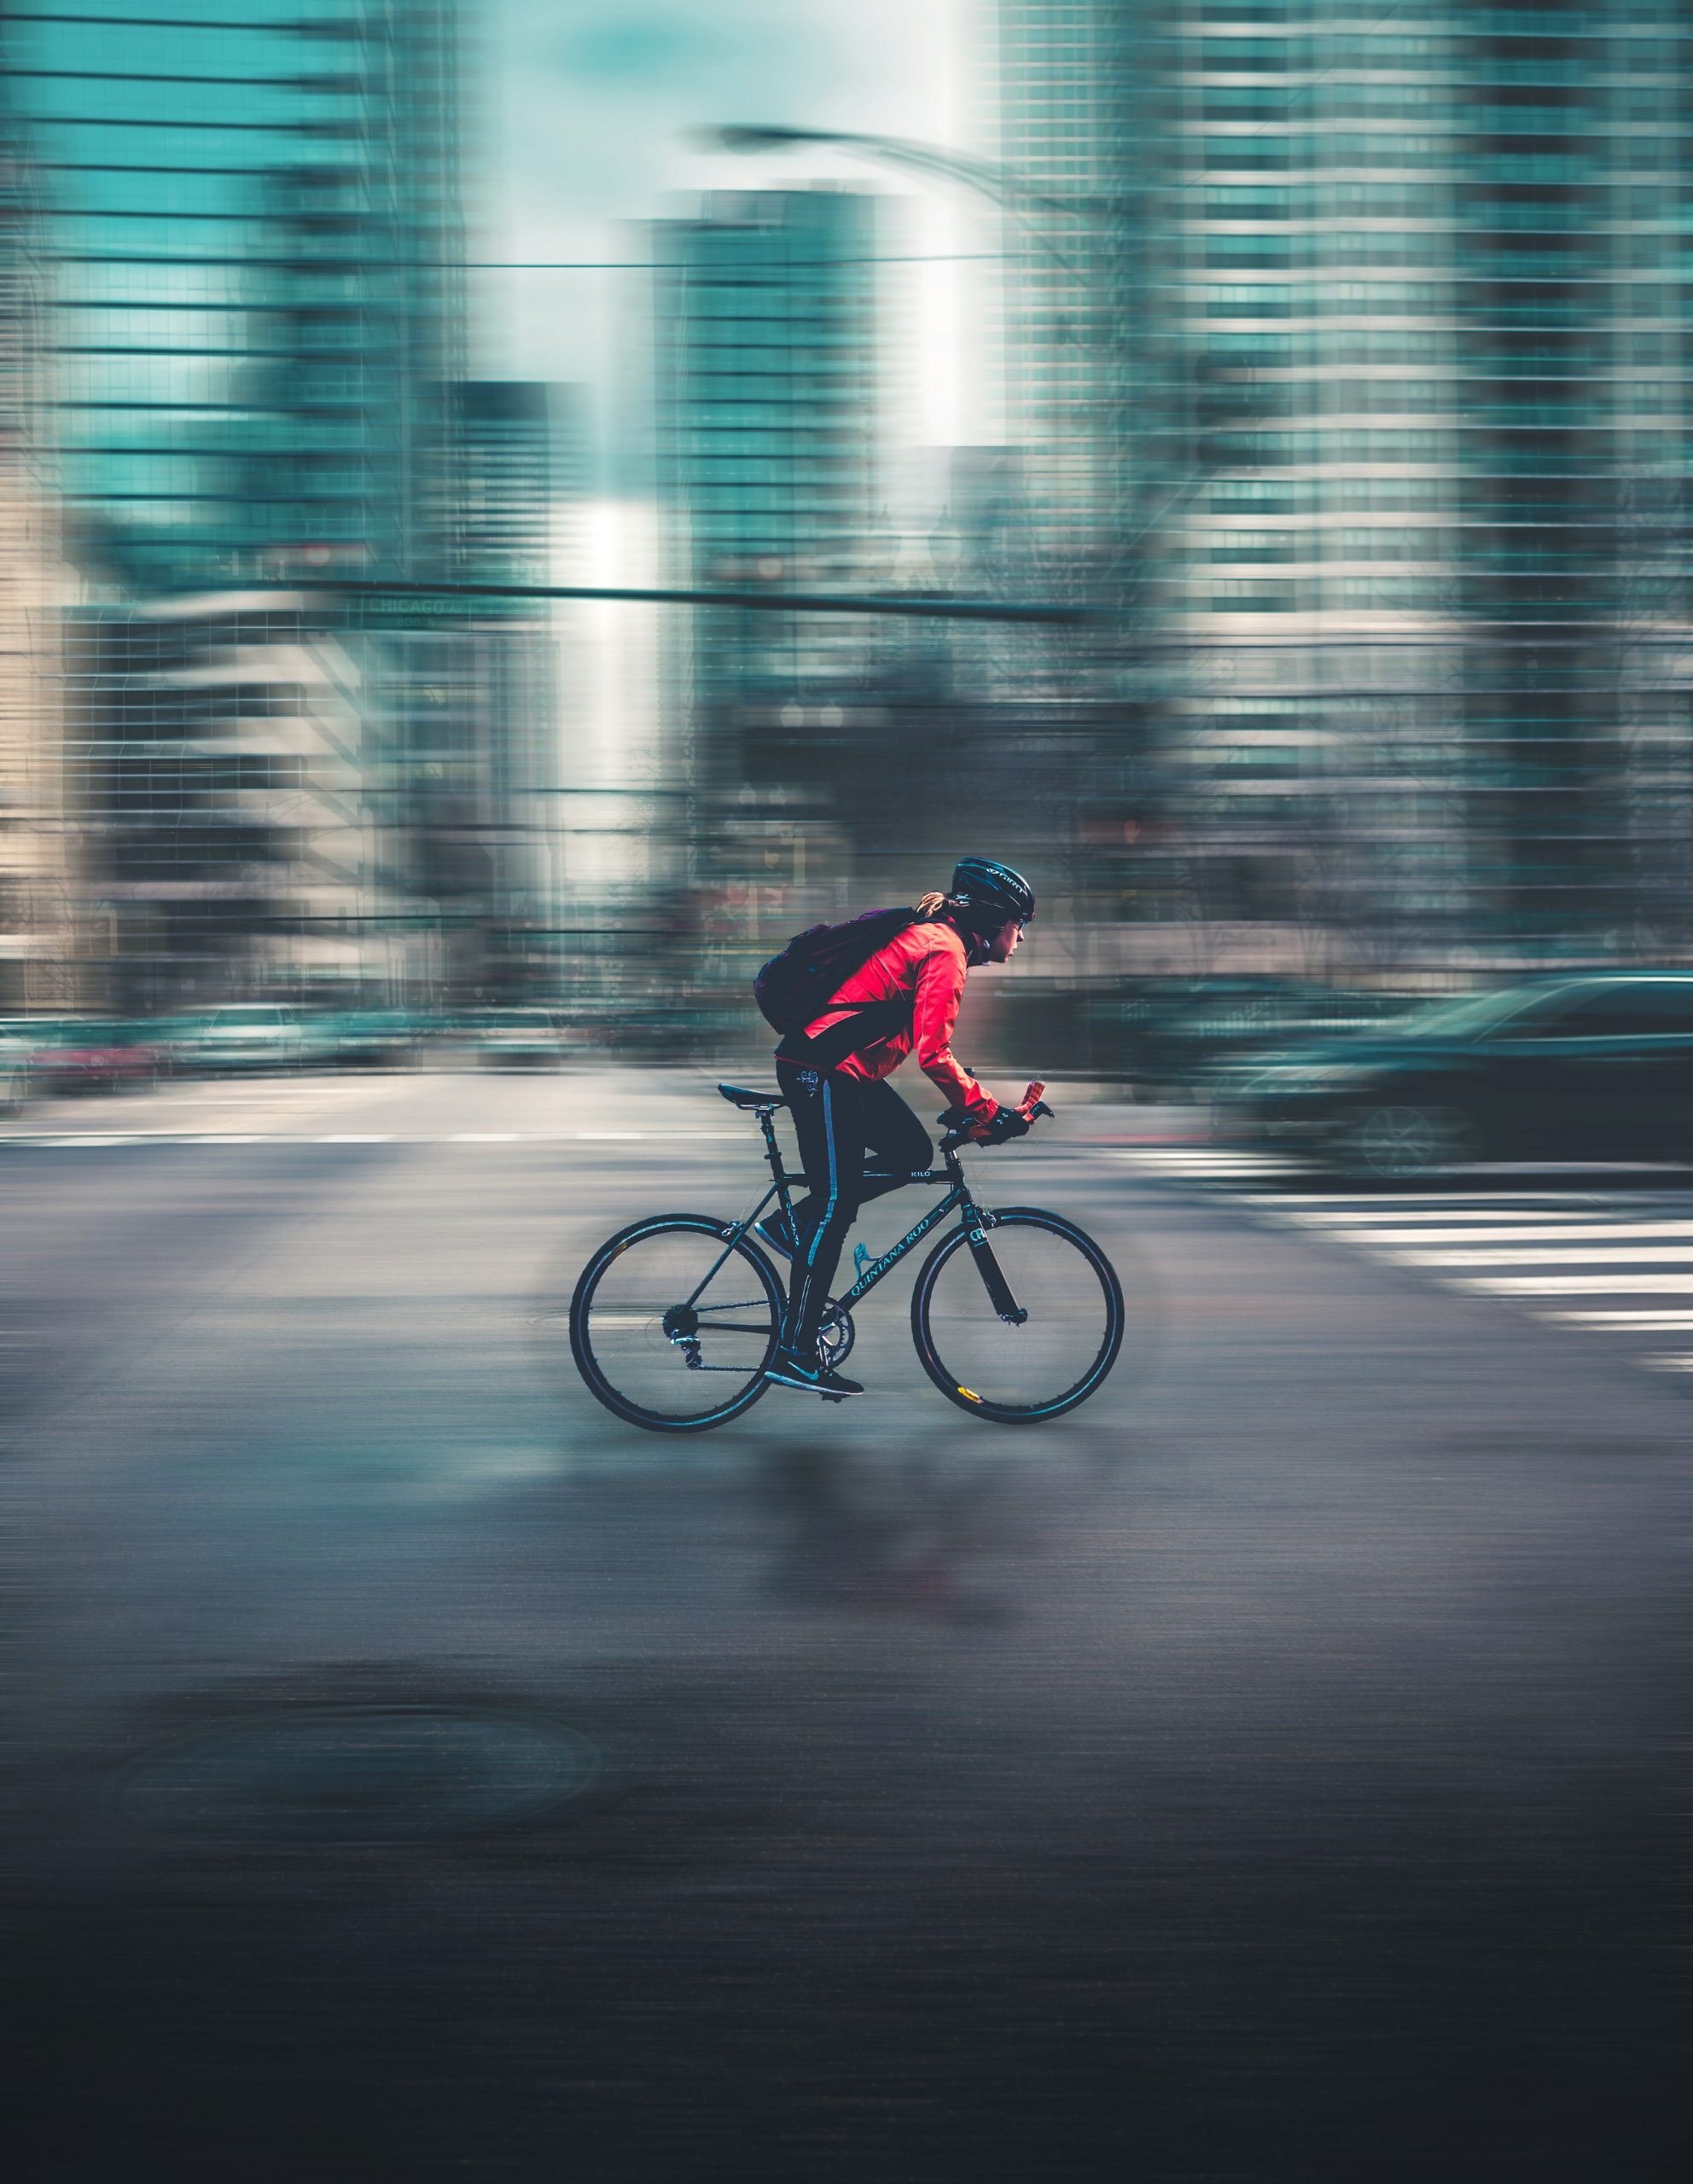 Bike rider in full gear rides on road in urban area